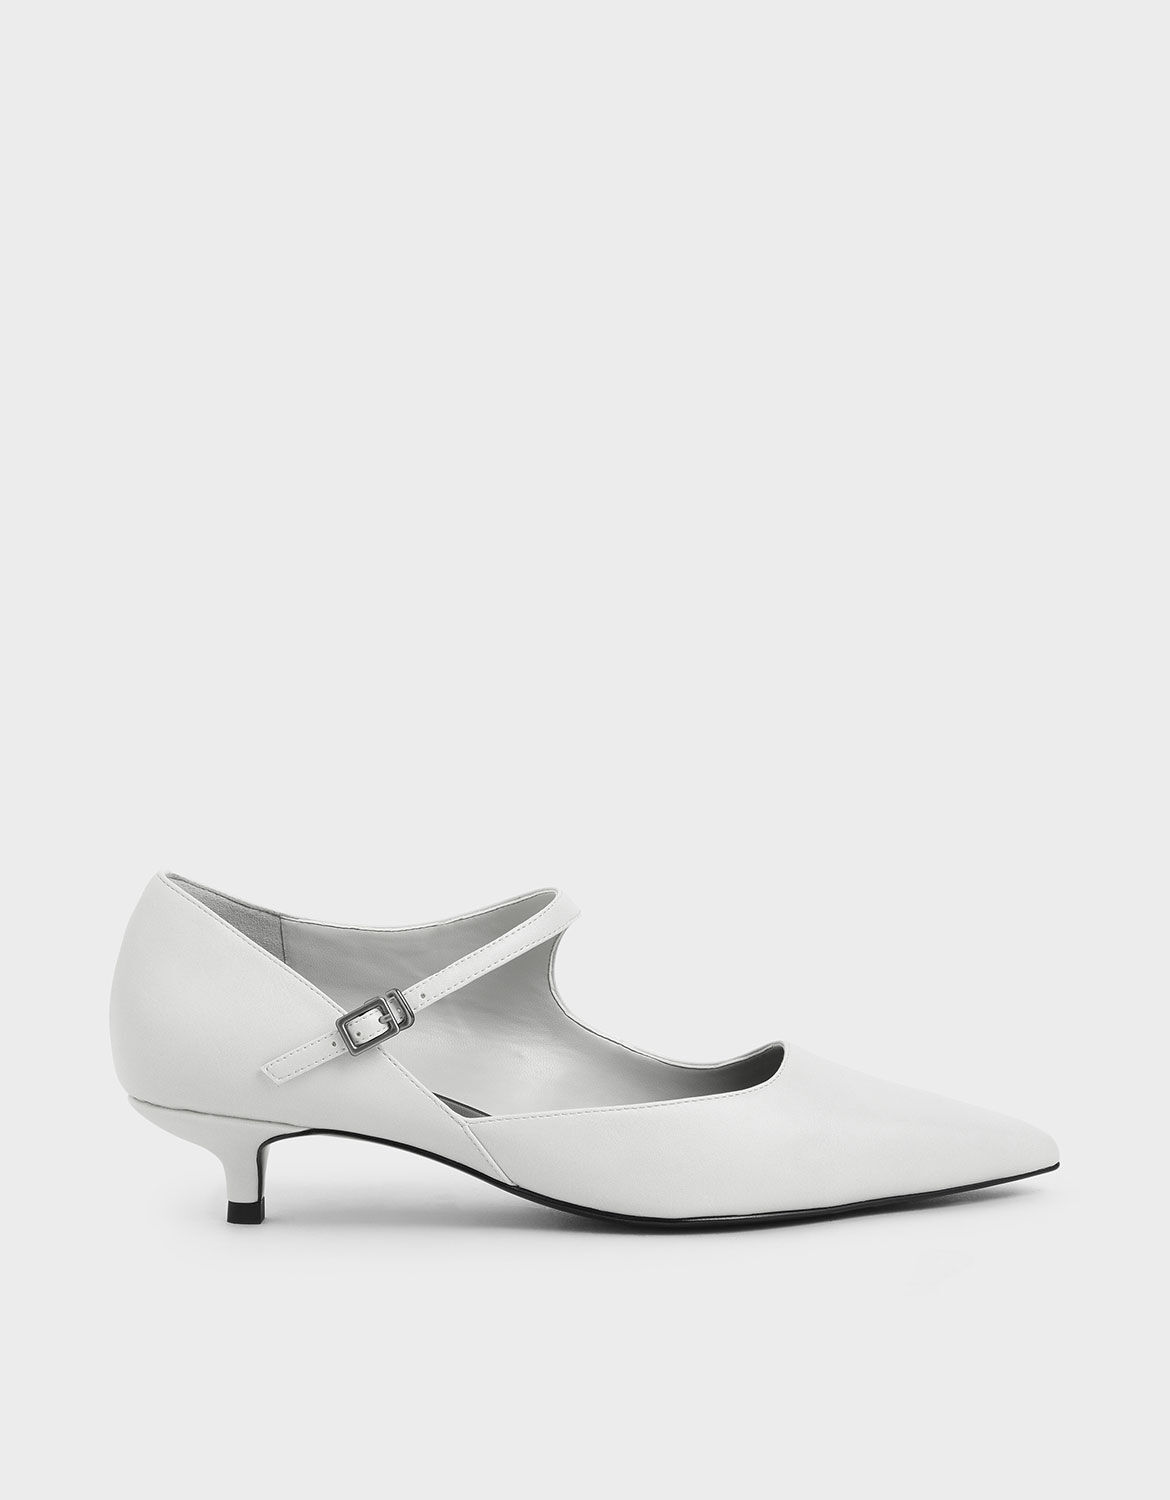 grey mary jane heels